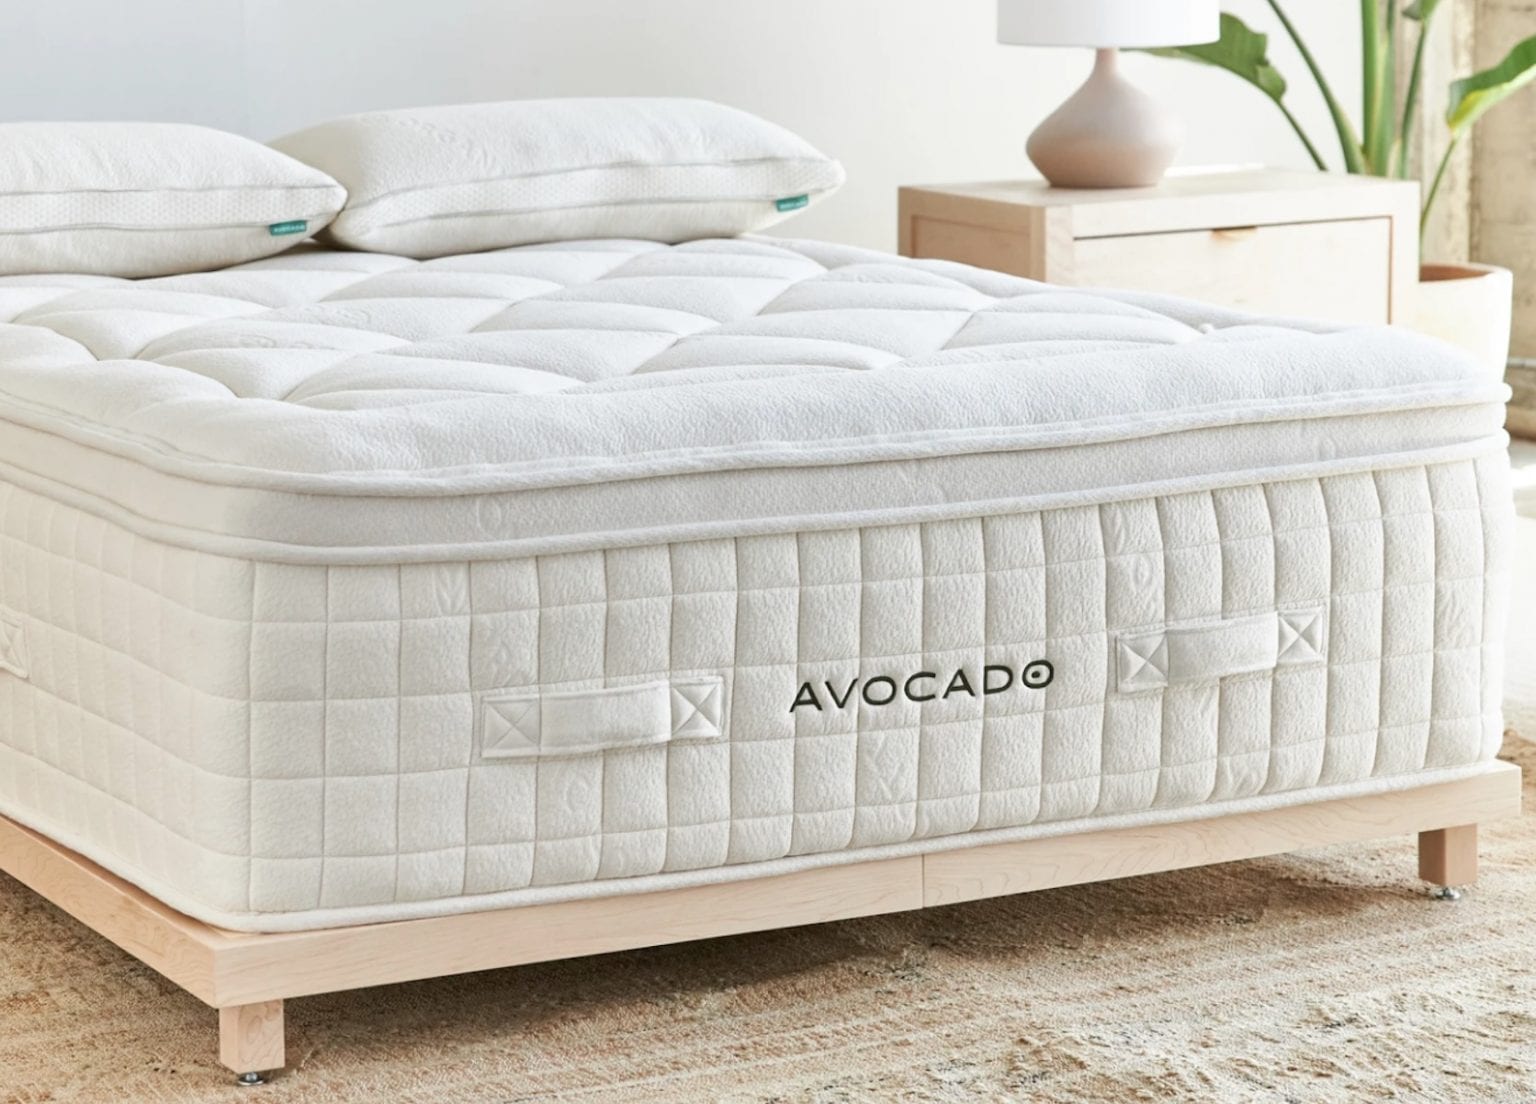 avocado mattress reviews reddit